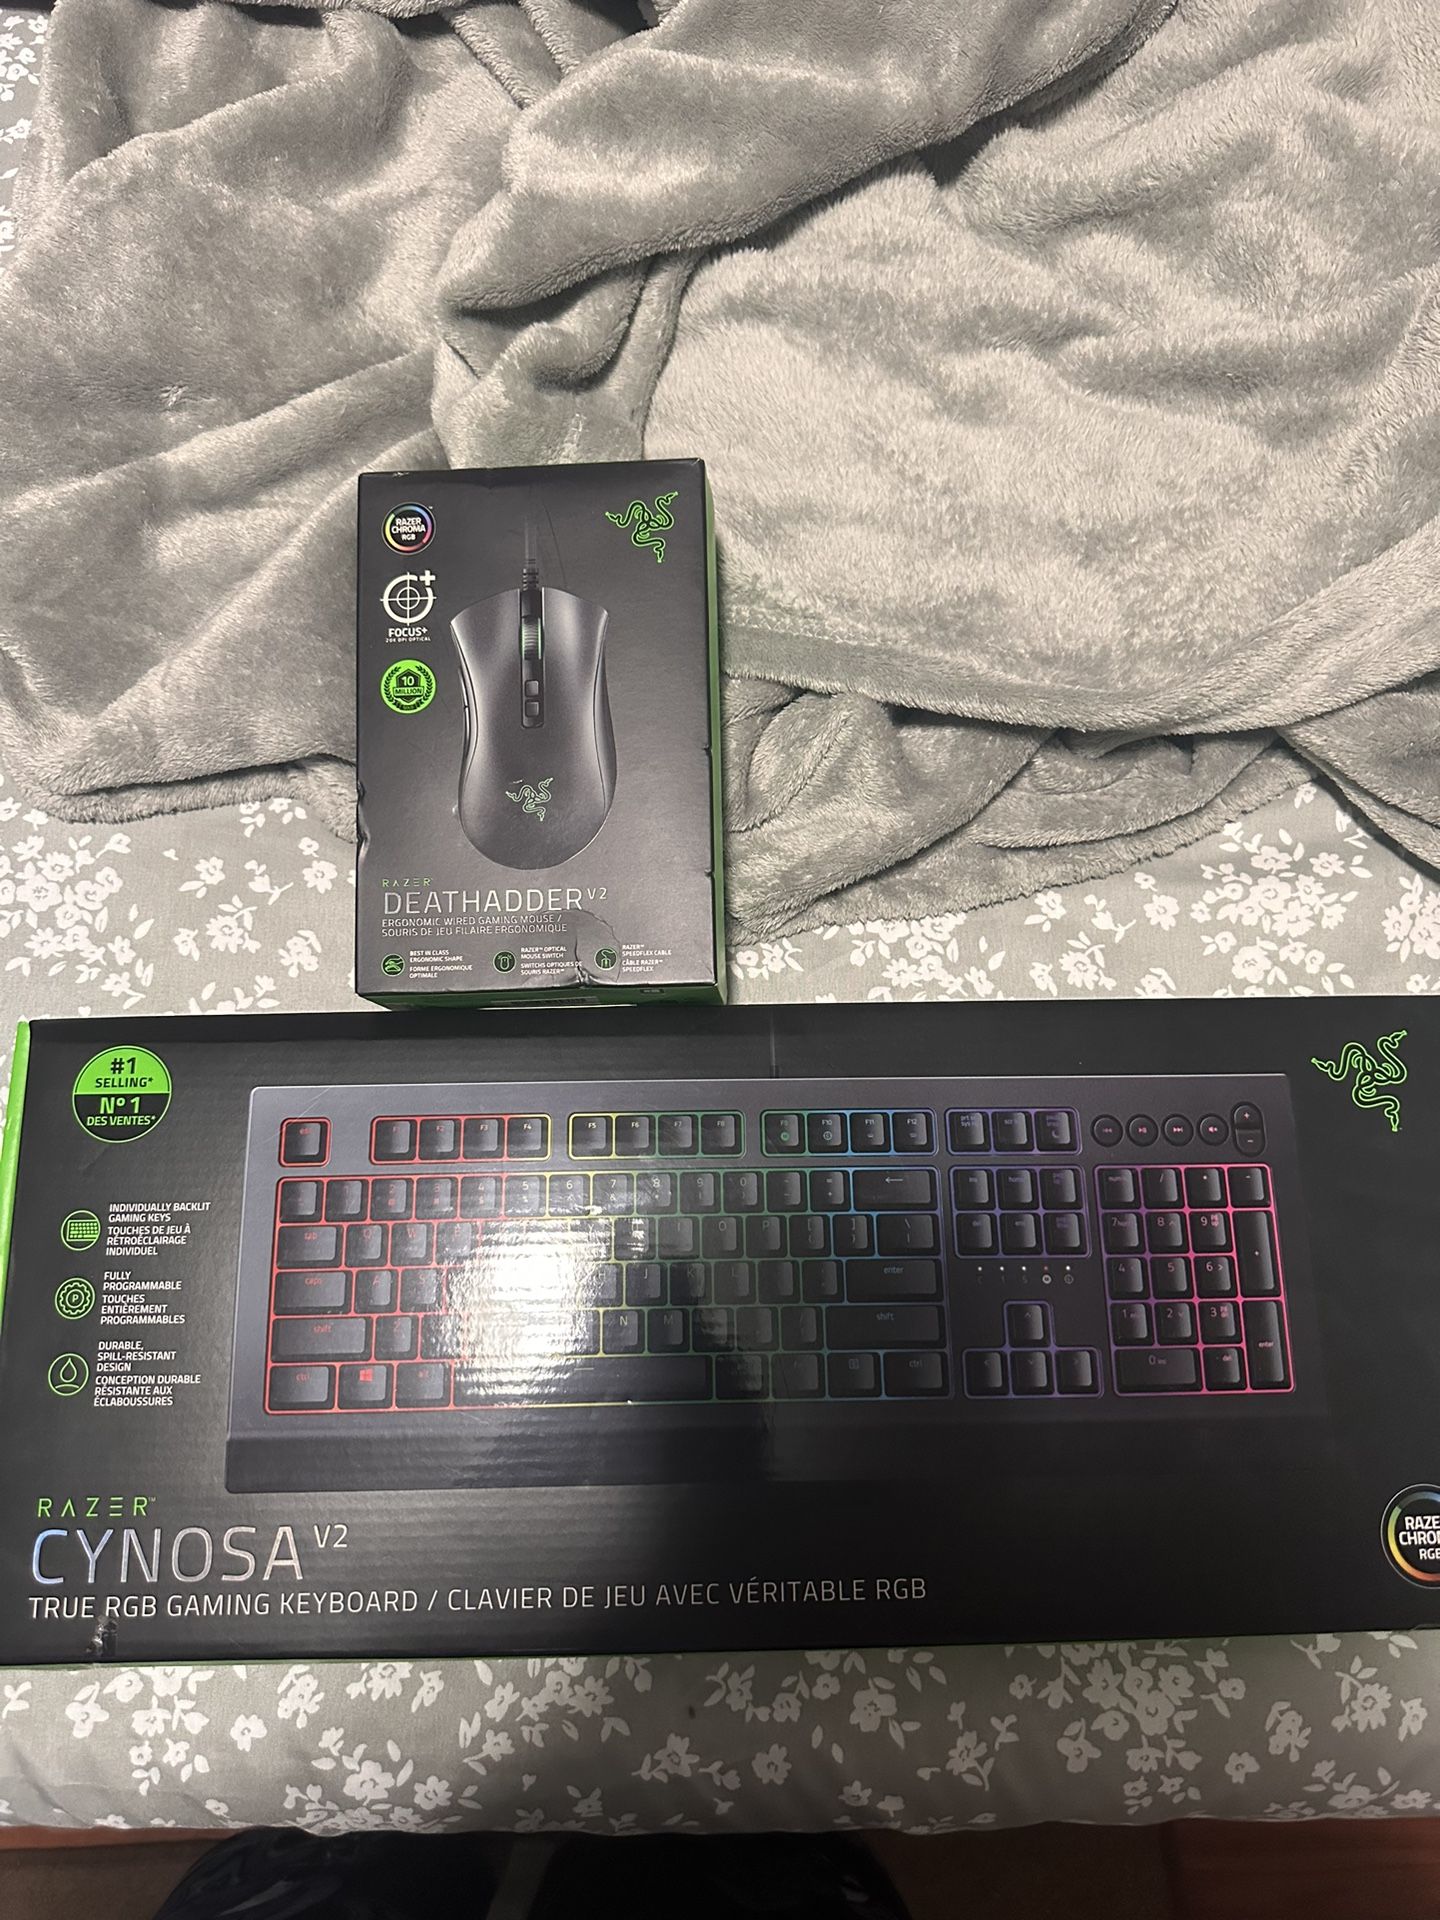 Razer Cynosa Keyboard And Deathadder Mouse